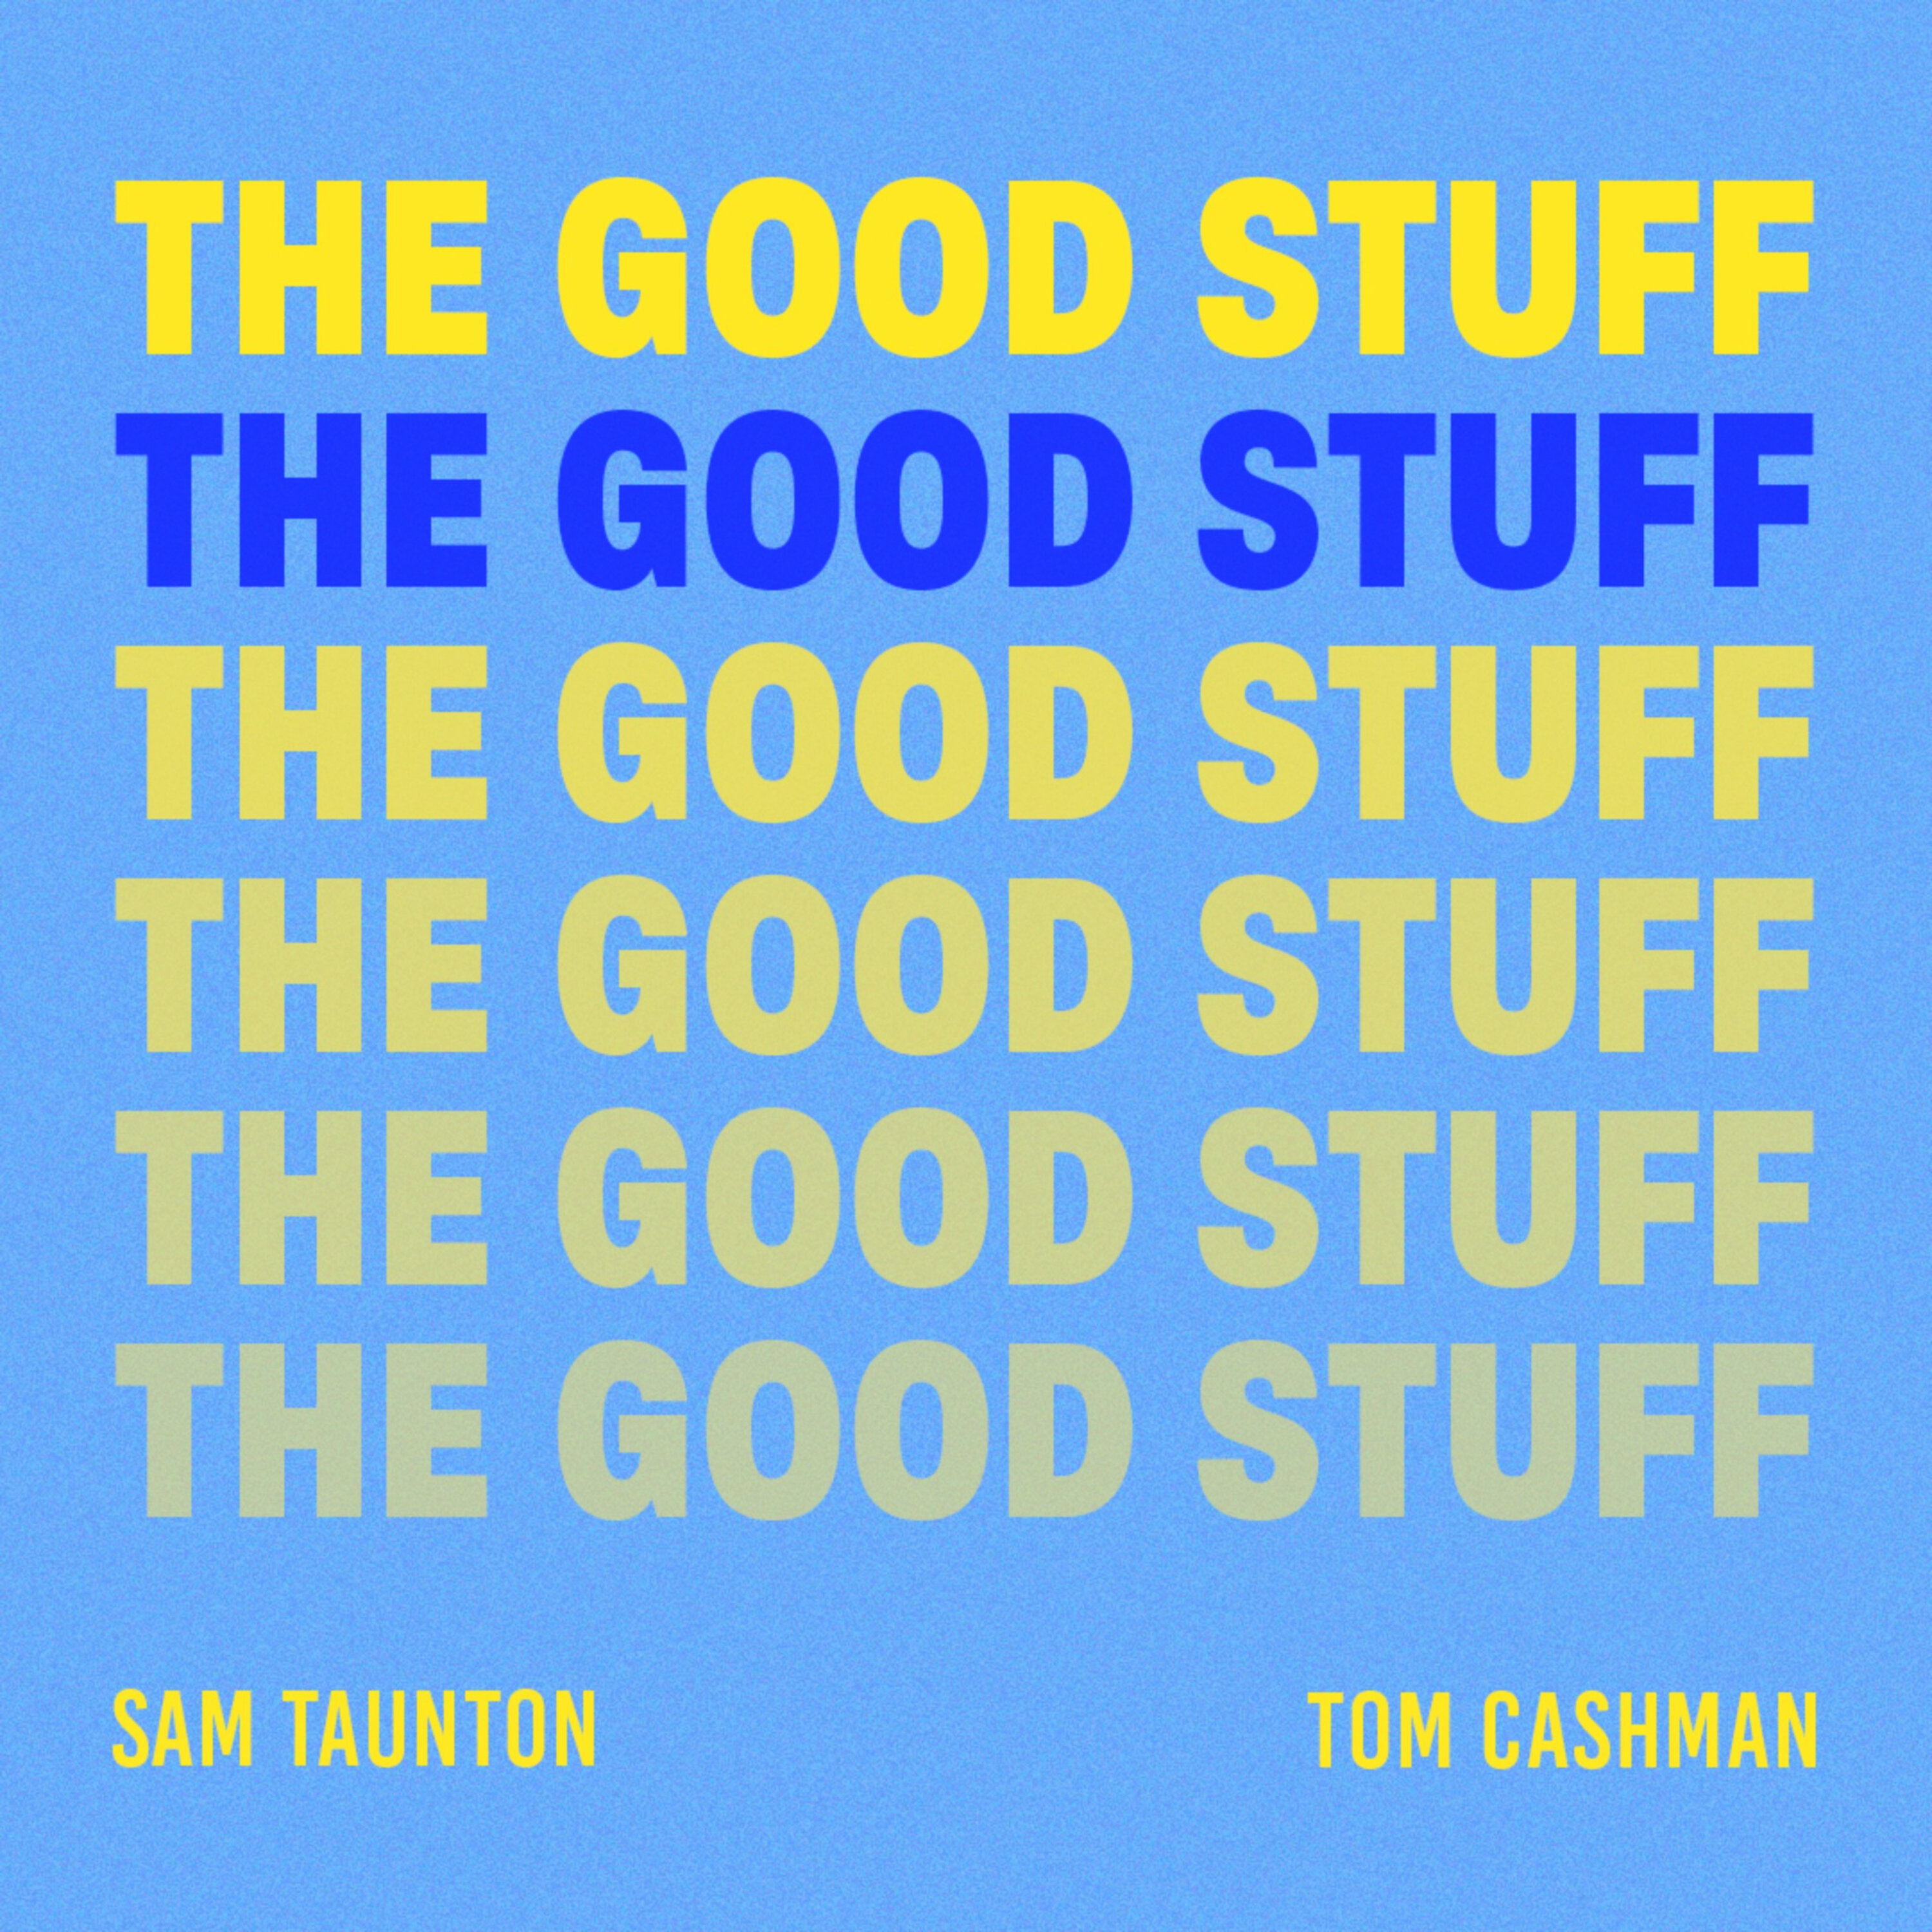 The Good Stuff - Episode 15 Feat. John Cruckshank